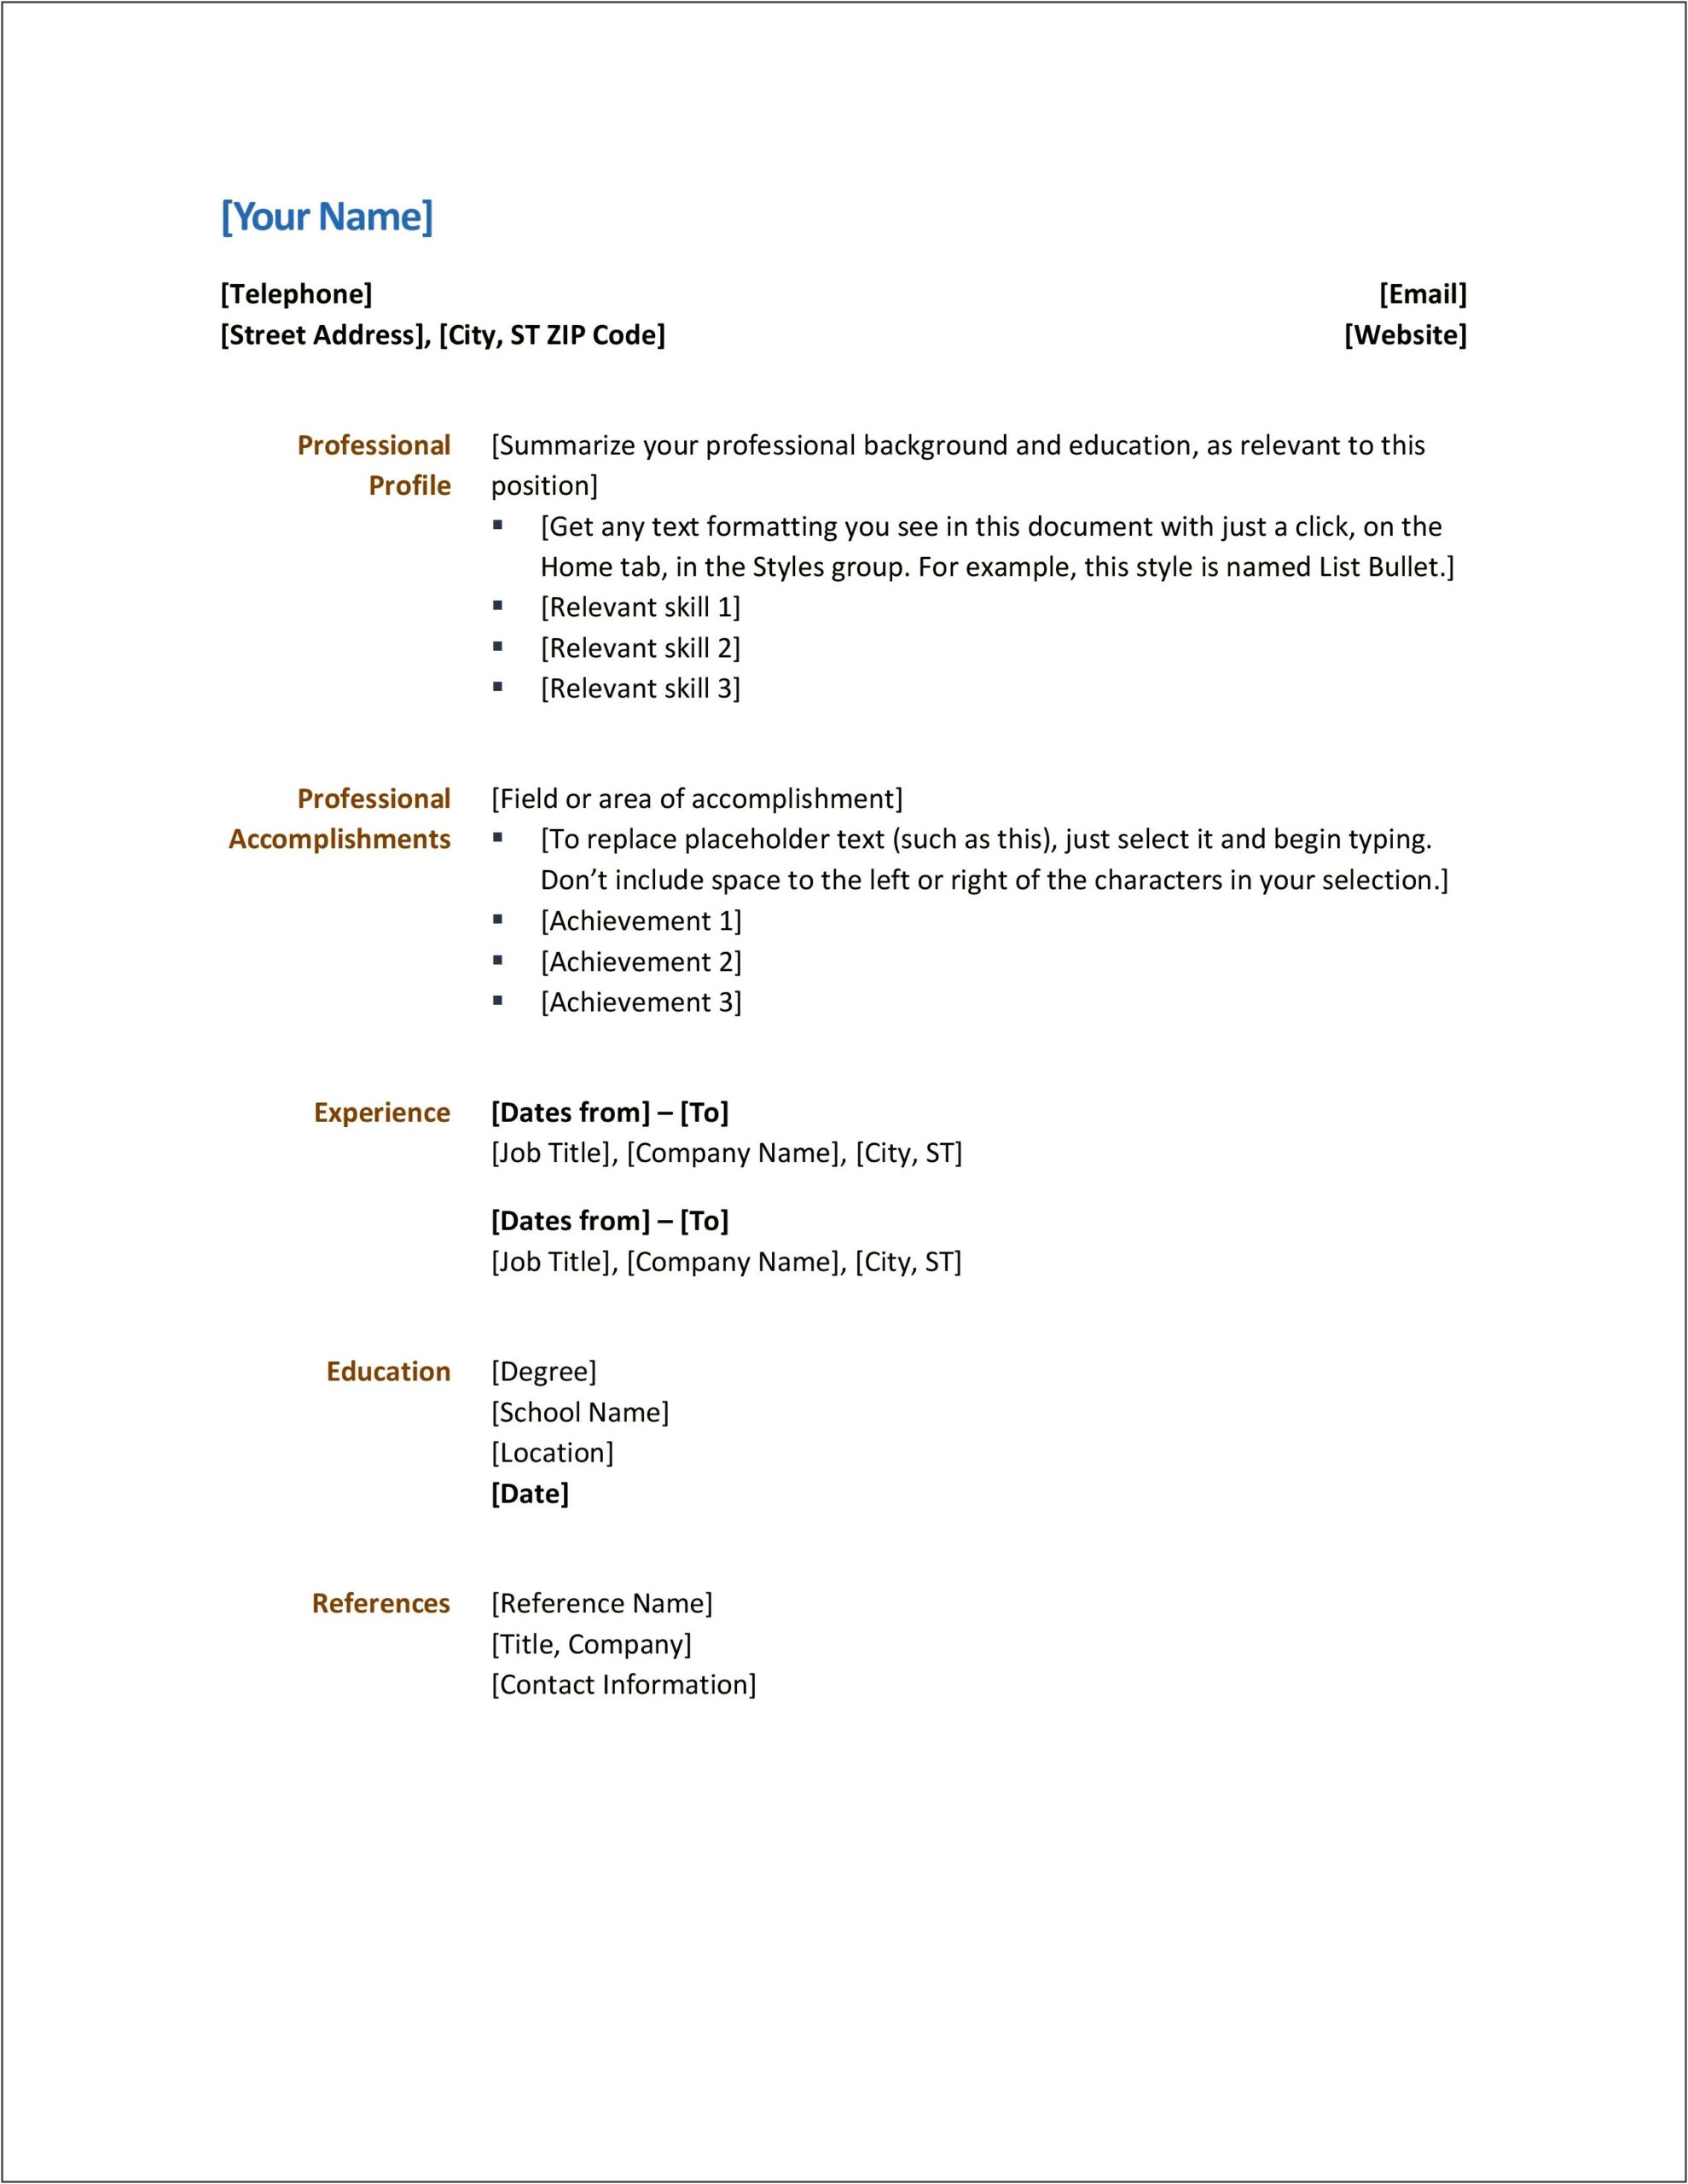 Resume Template Download Microsoft Word 2003